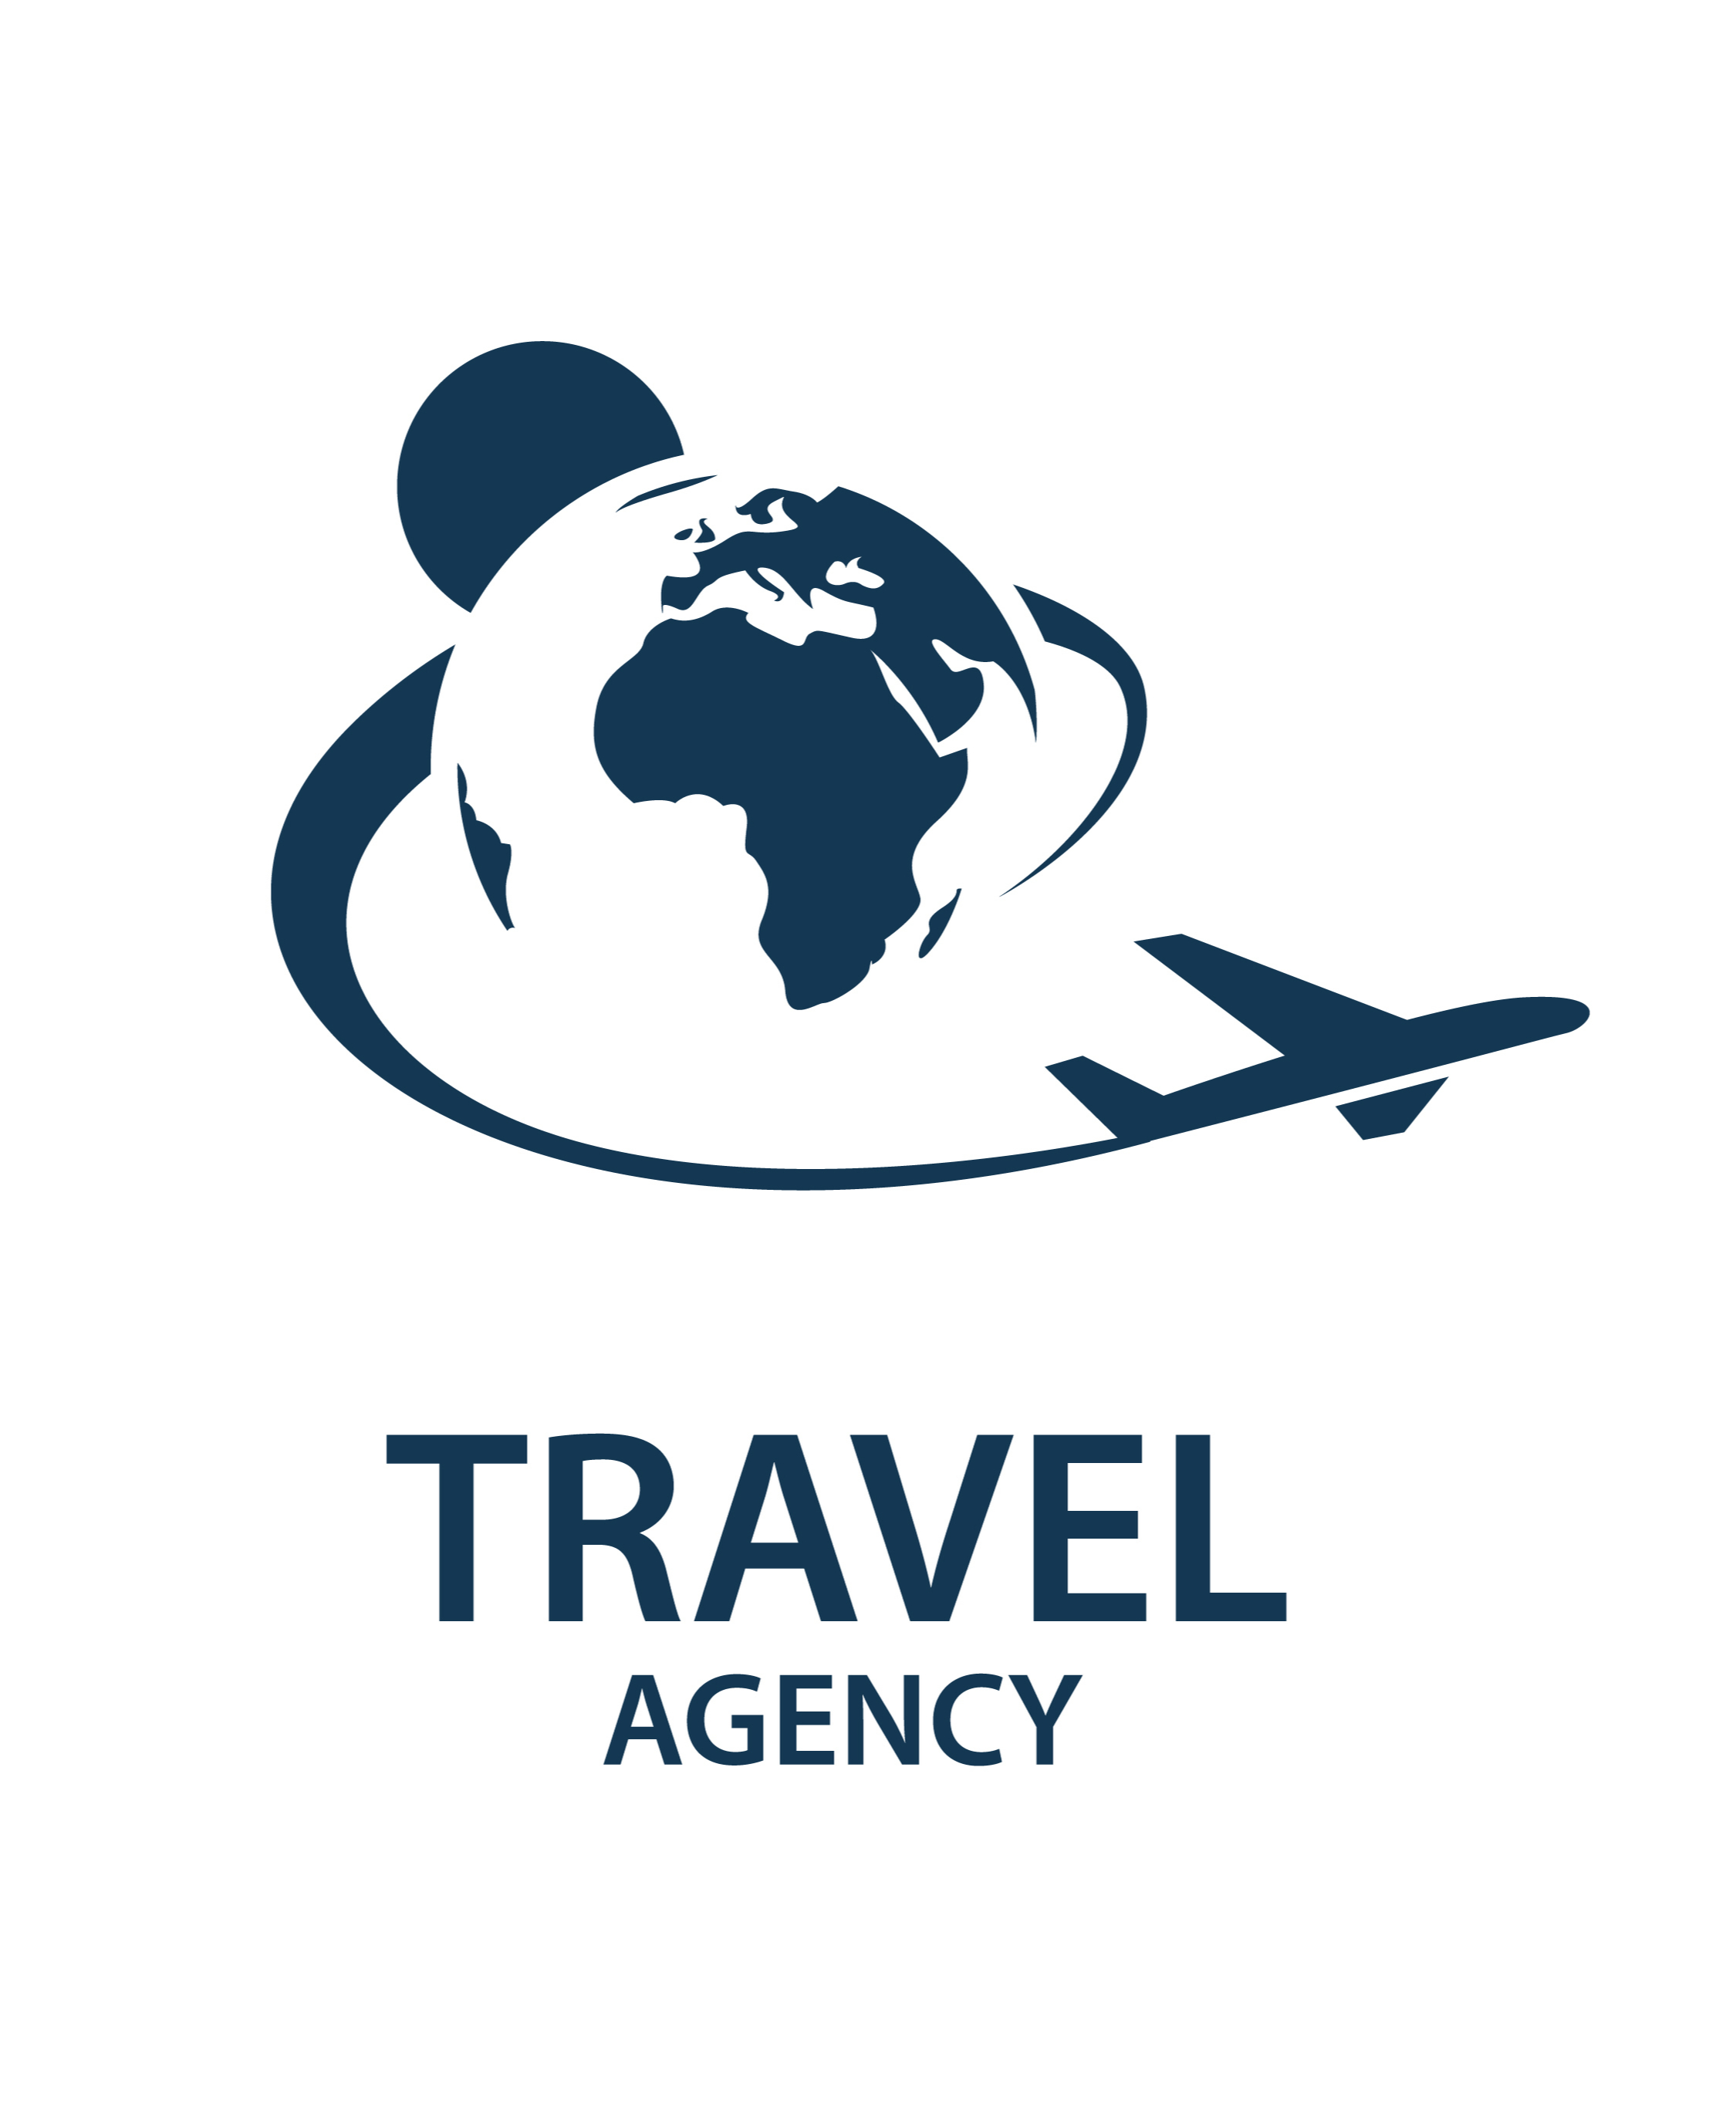 Travel agency shutterstock 626532920